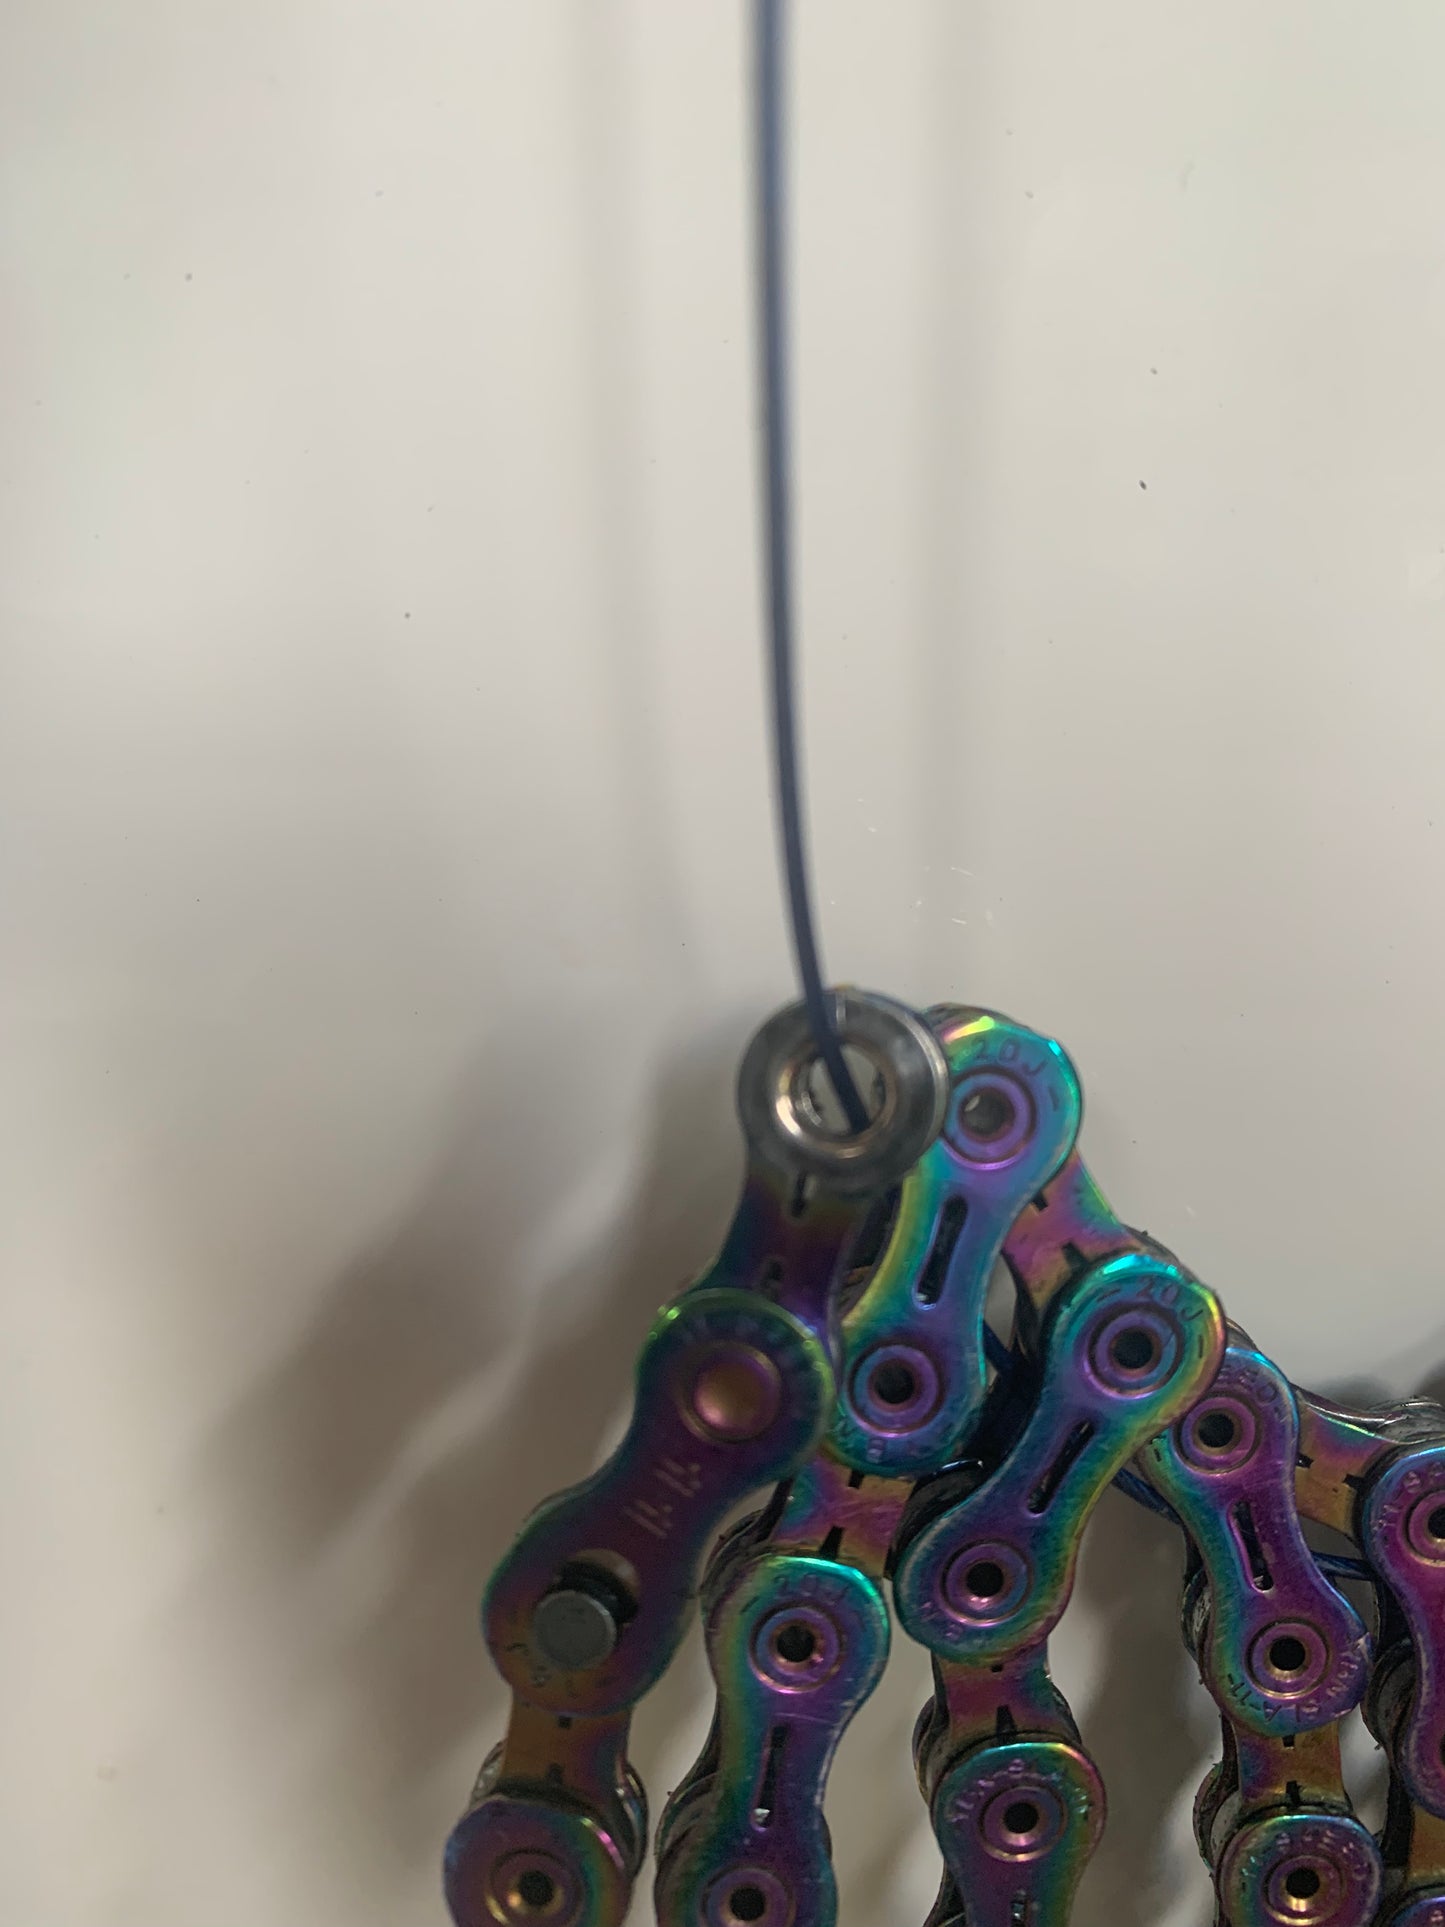 Chain retainer